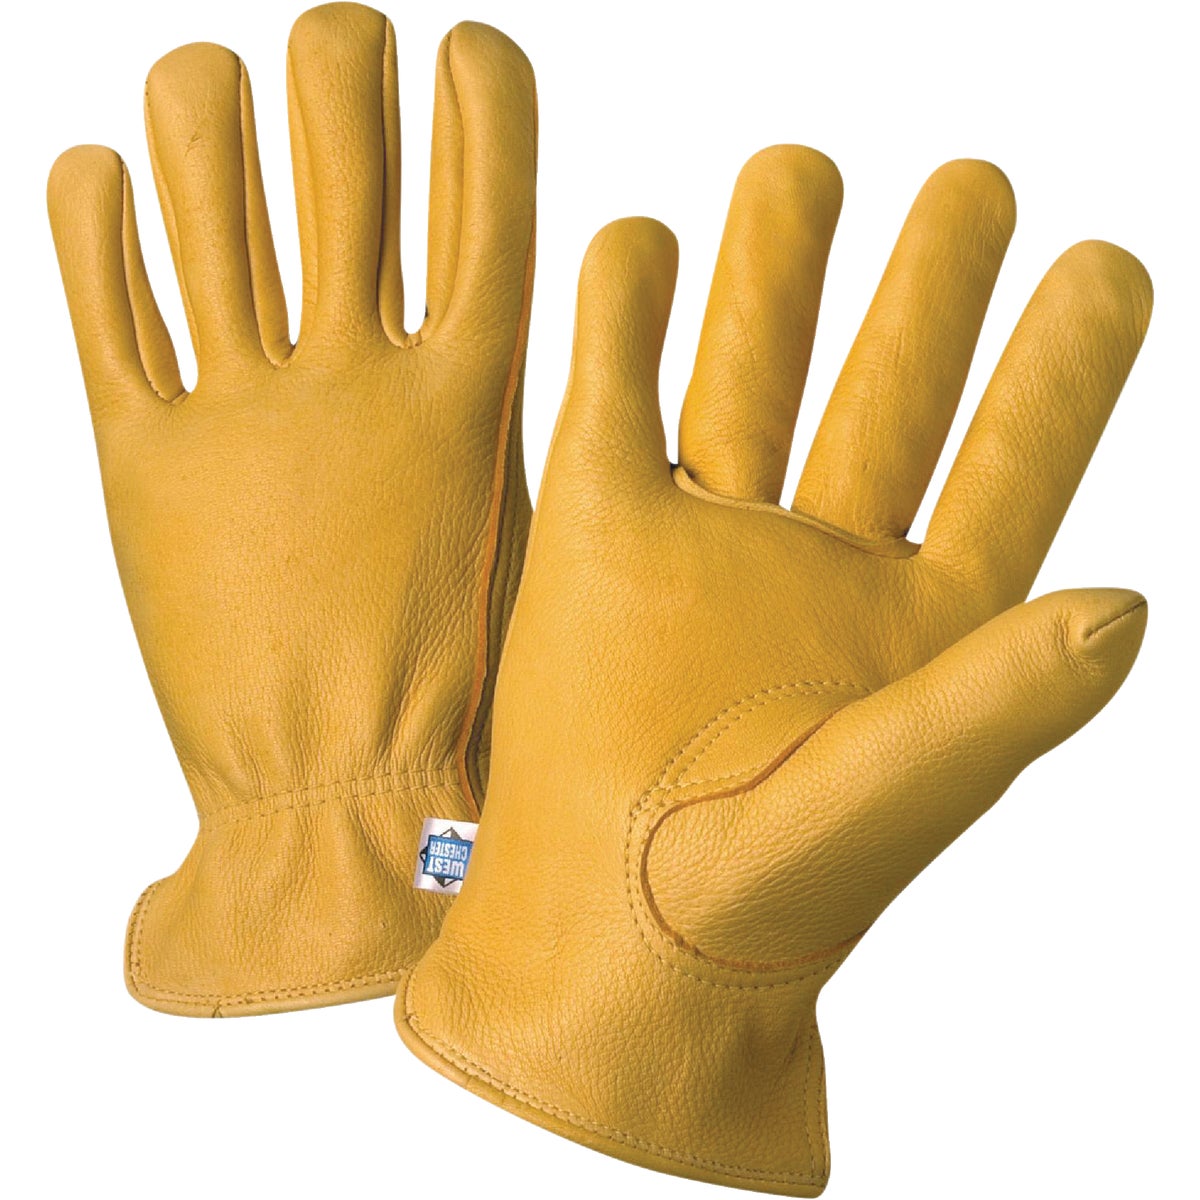 Item 740657, Premium deerskin leather driver gloves.